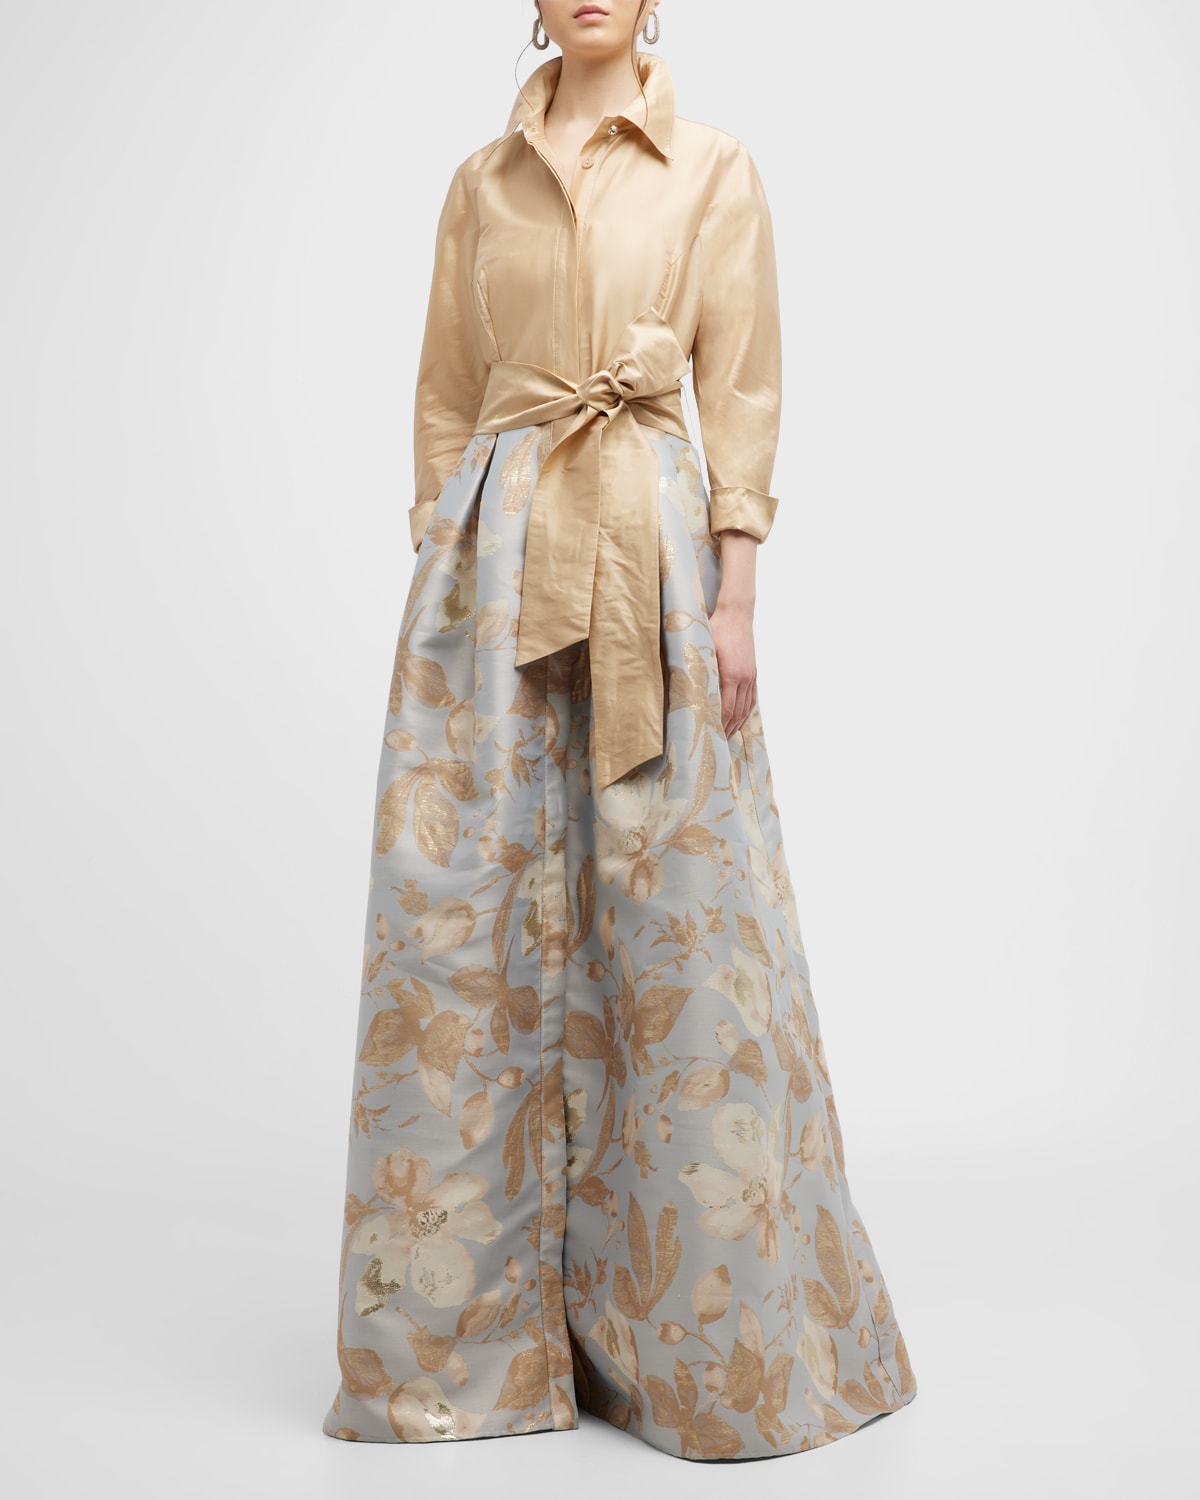 Rickie Freeman For Teri Jon Floral Jacquard Waist Taffeta Shirtdress Gown In Gold Multi